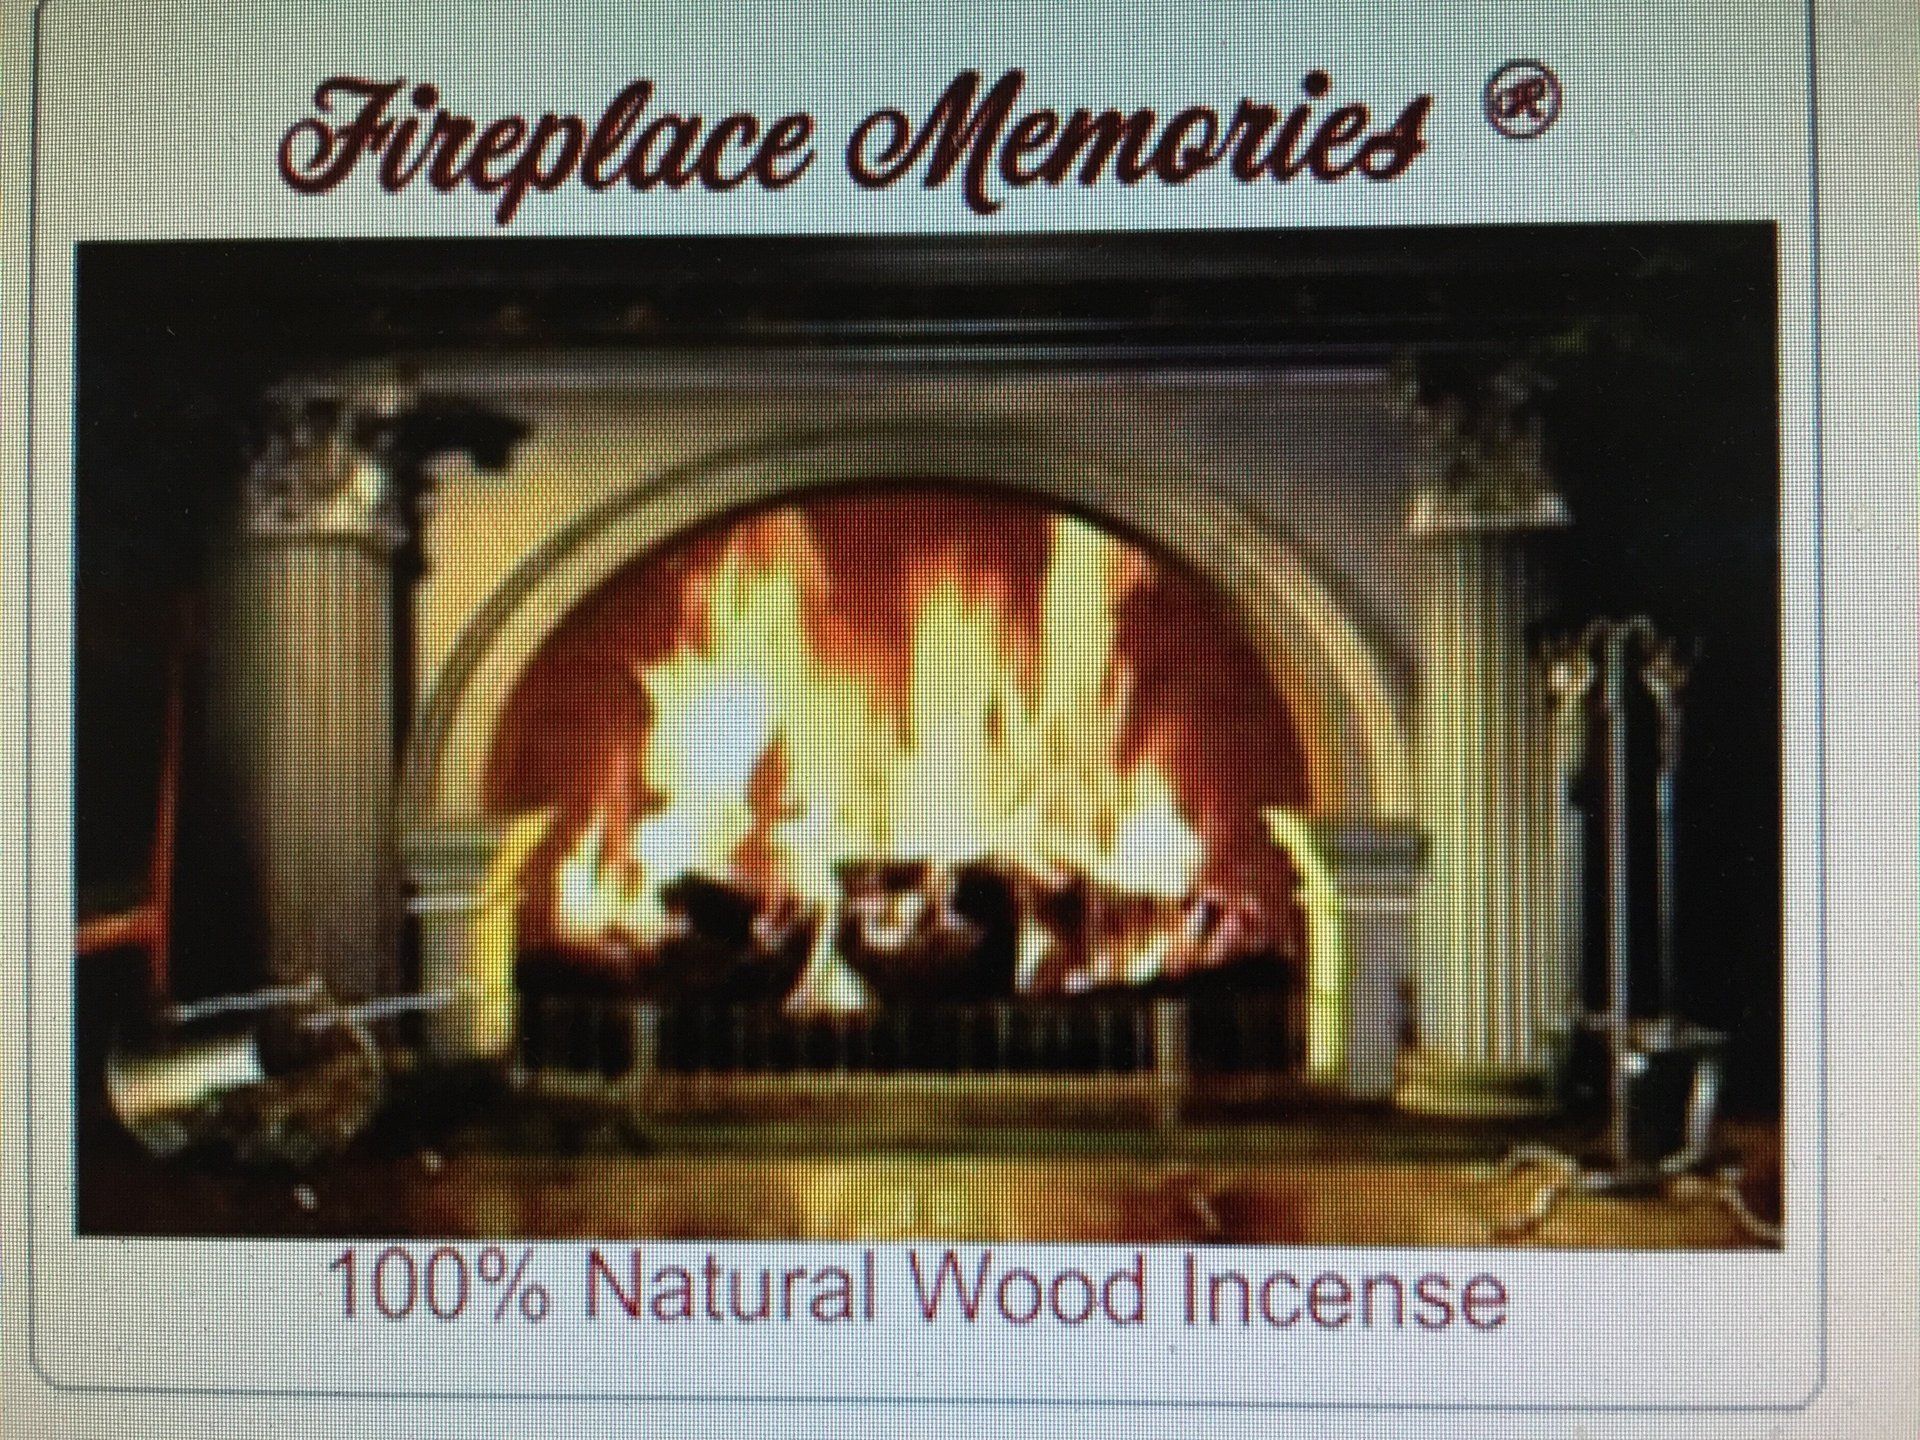 Fireplace memories 100% Natural Wood Incense